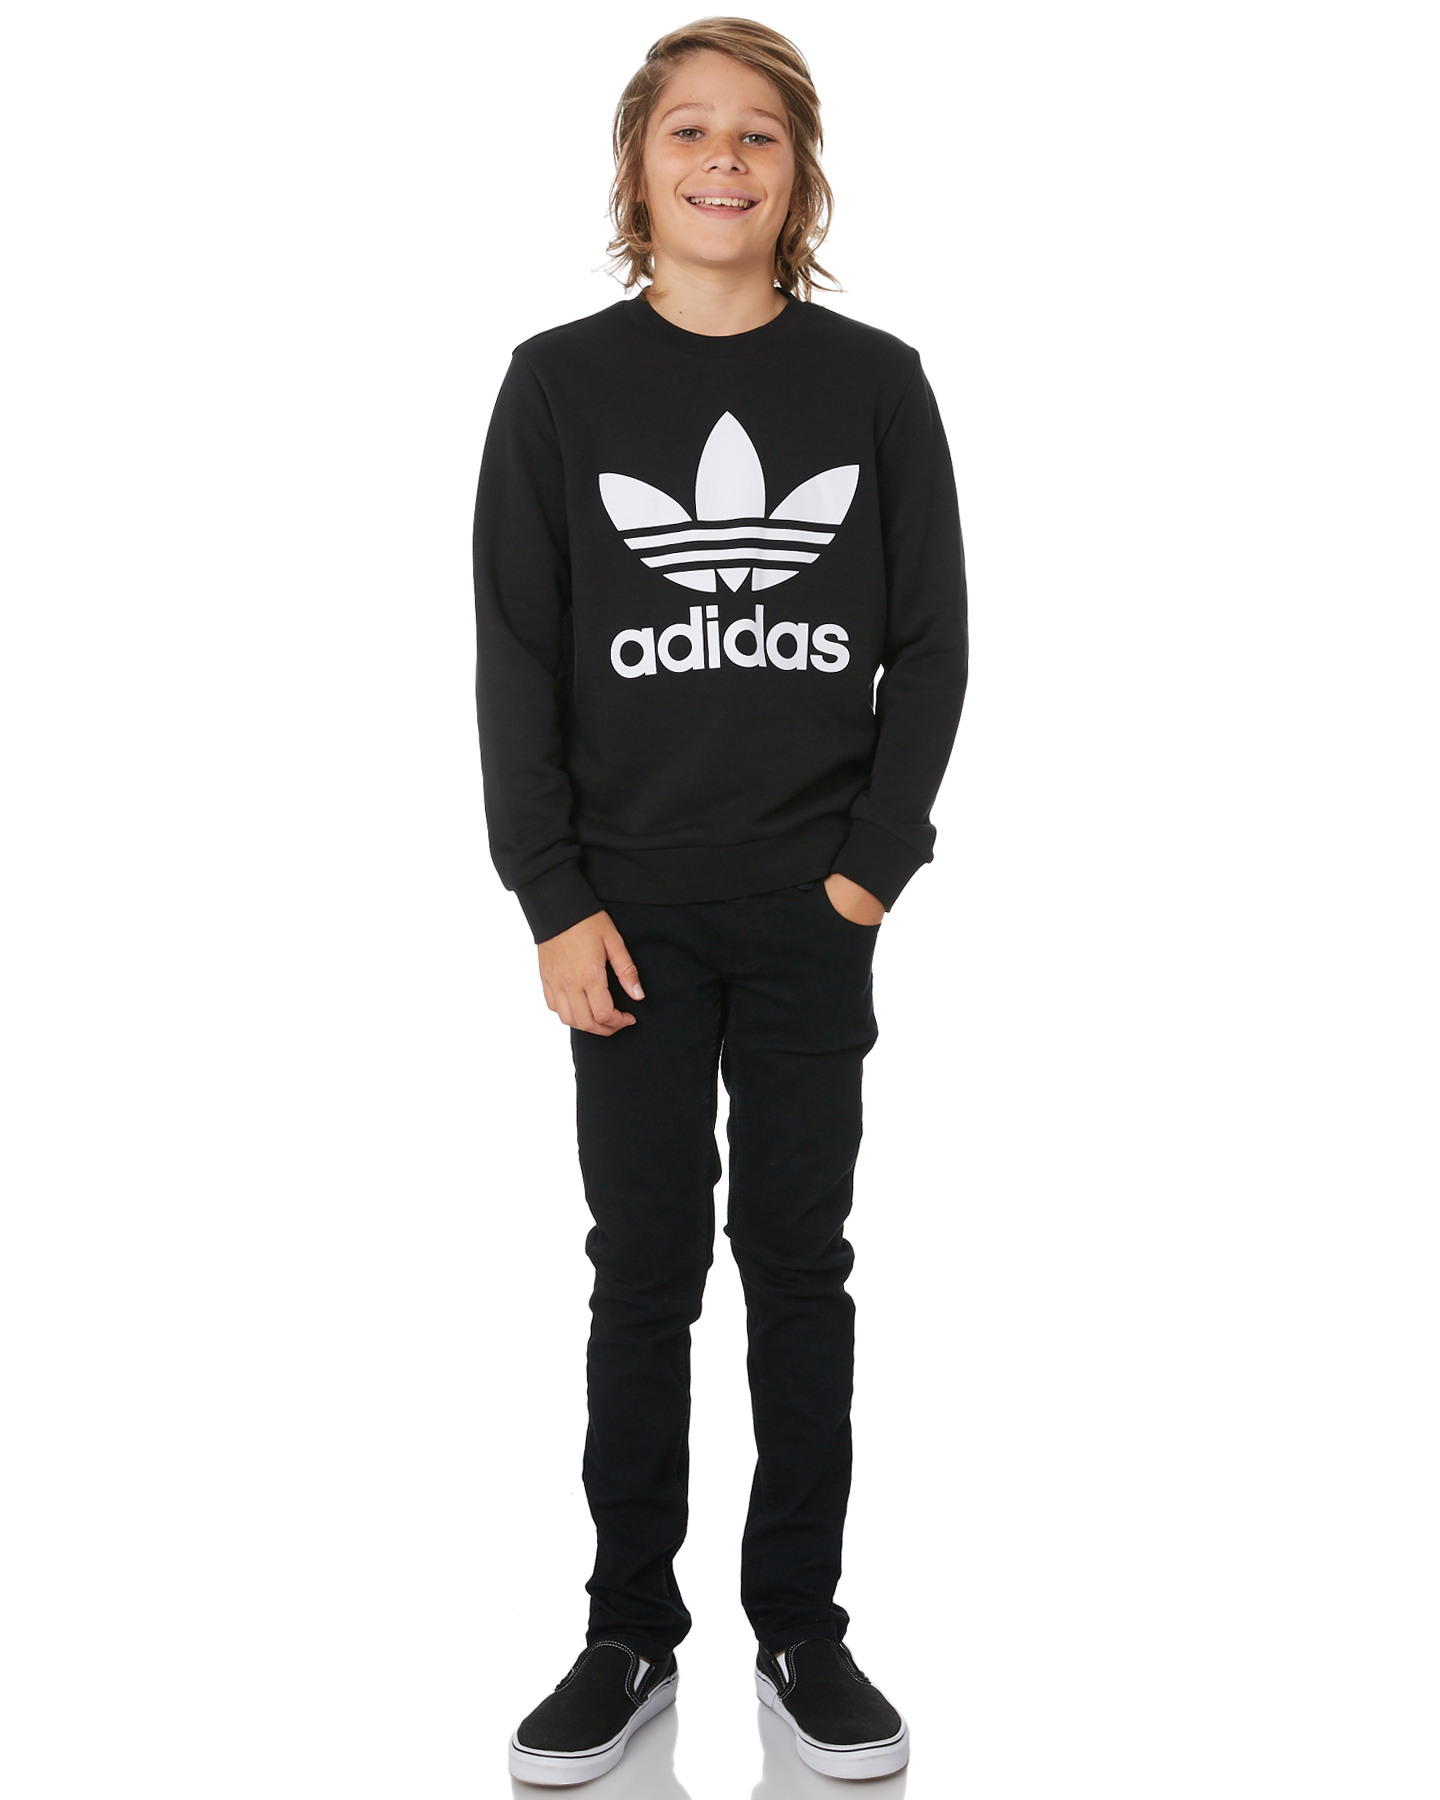 Adidas Boys Trefoil Crew - Teen - Black White | SurfStitch